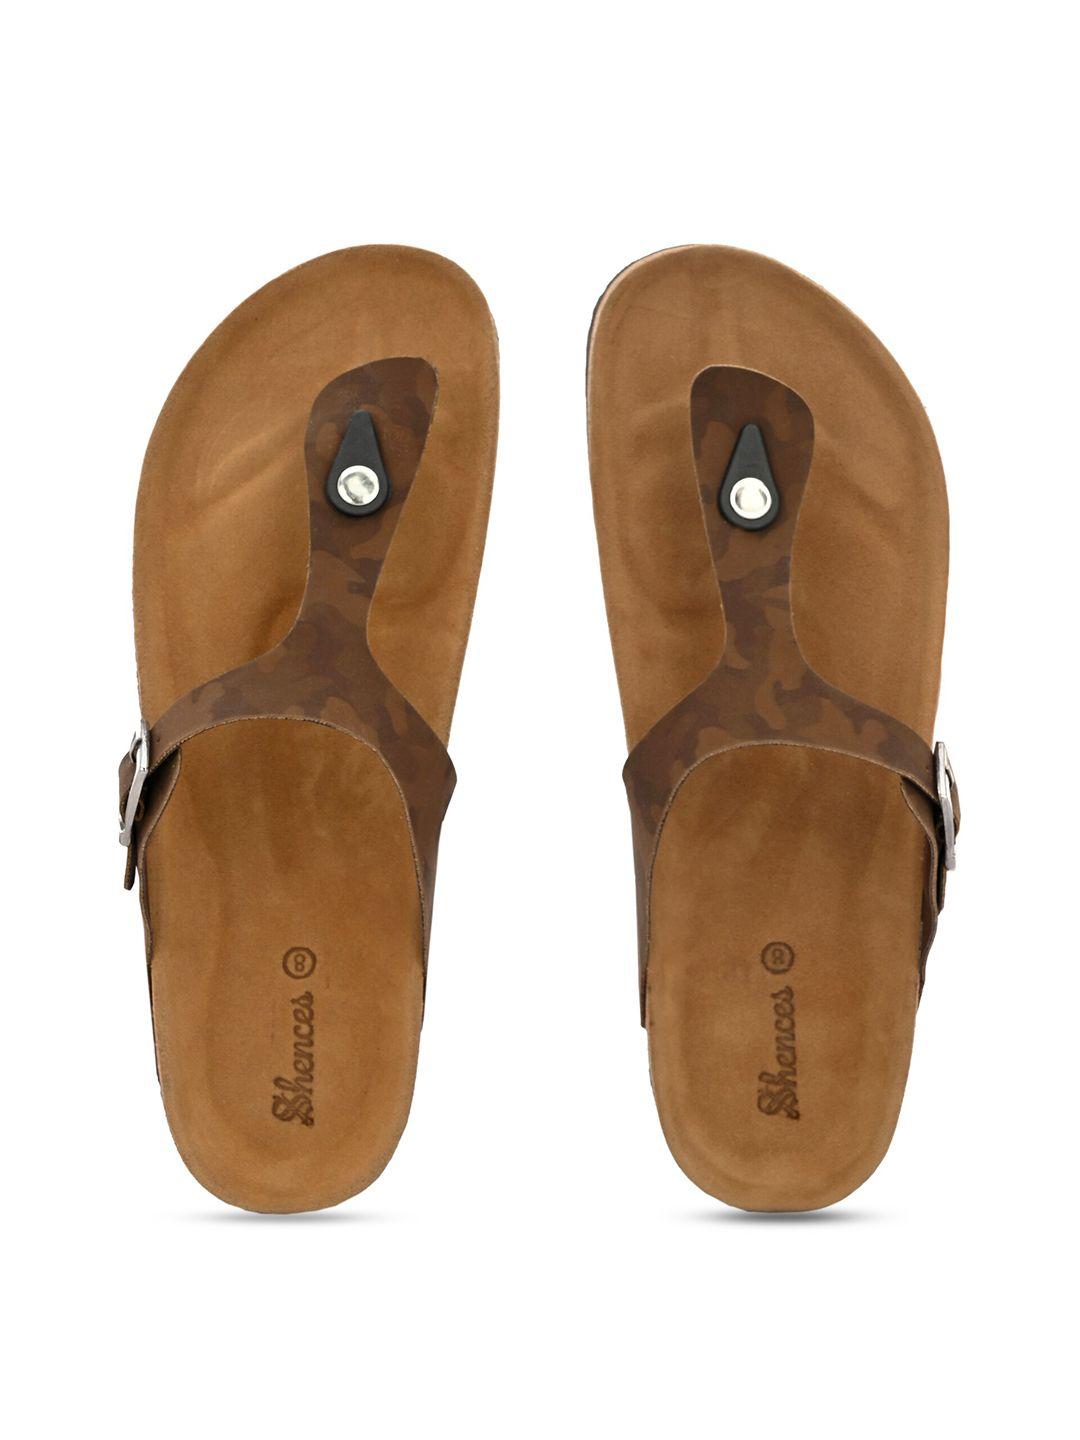 shences-men-shences-cork--printed-open-toe-comfort-sandals-with-buckle-detail